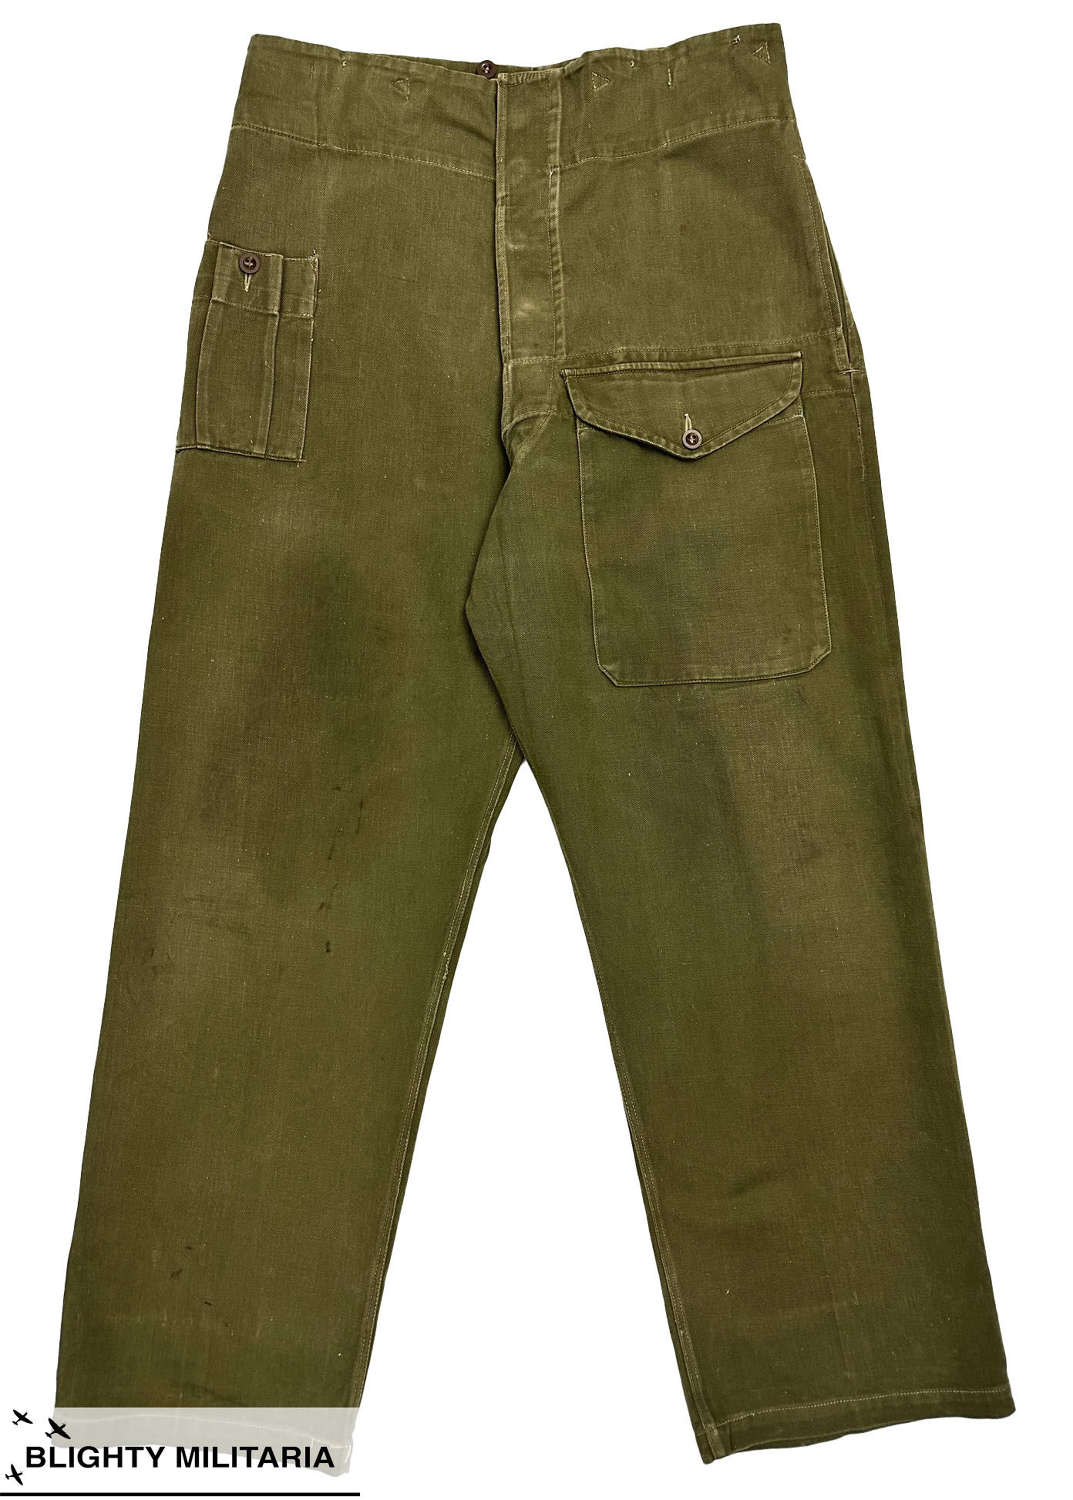 Rare WW2 British Army Drill Green Fatigue Trousers